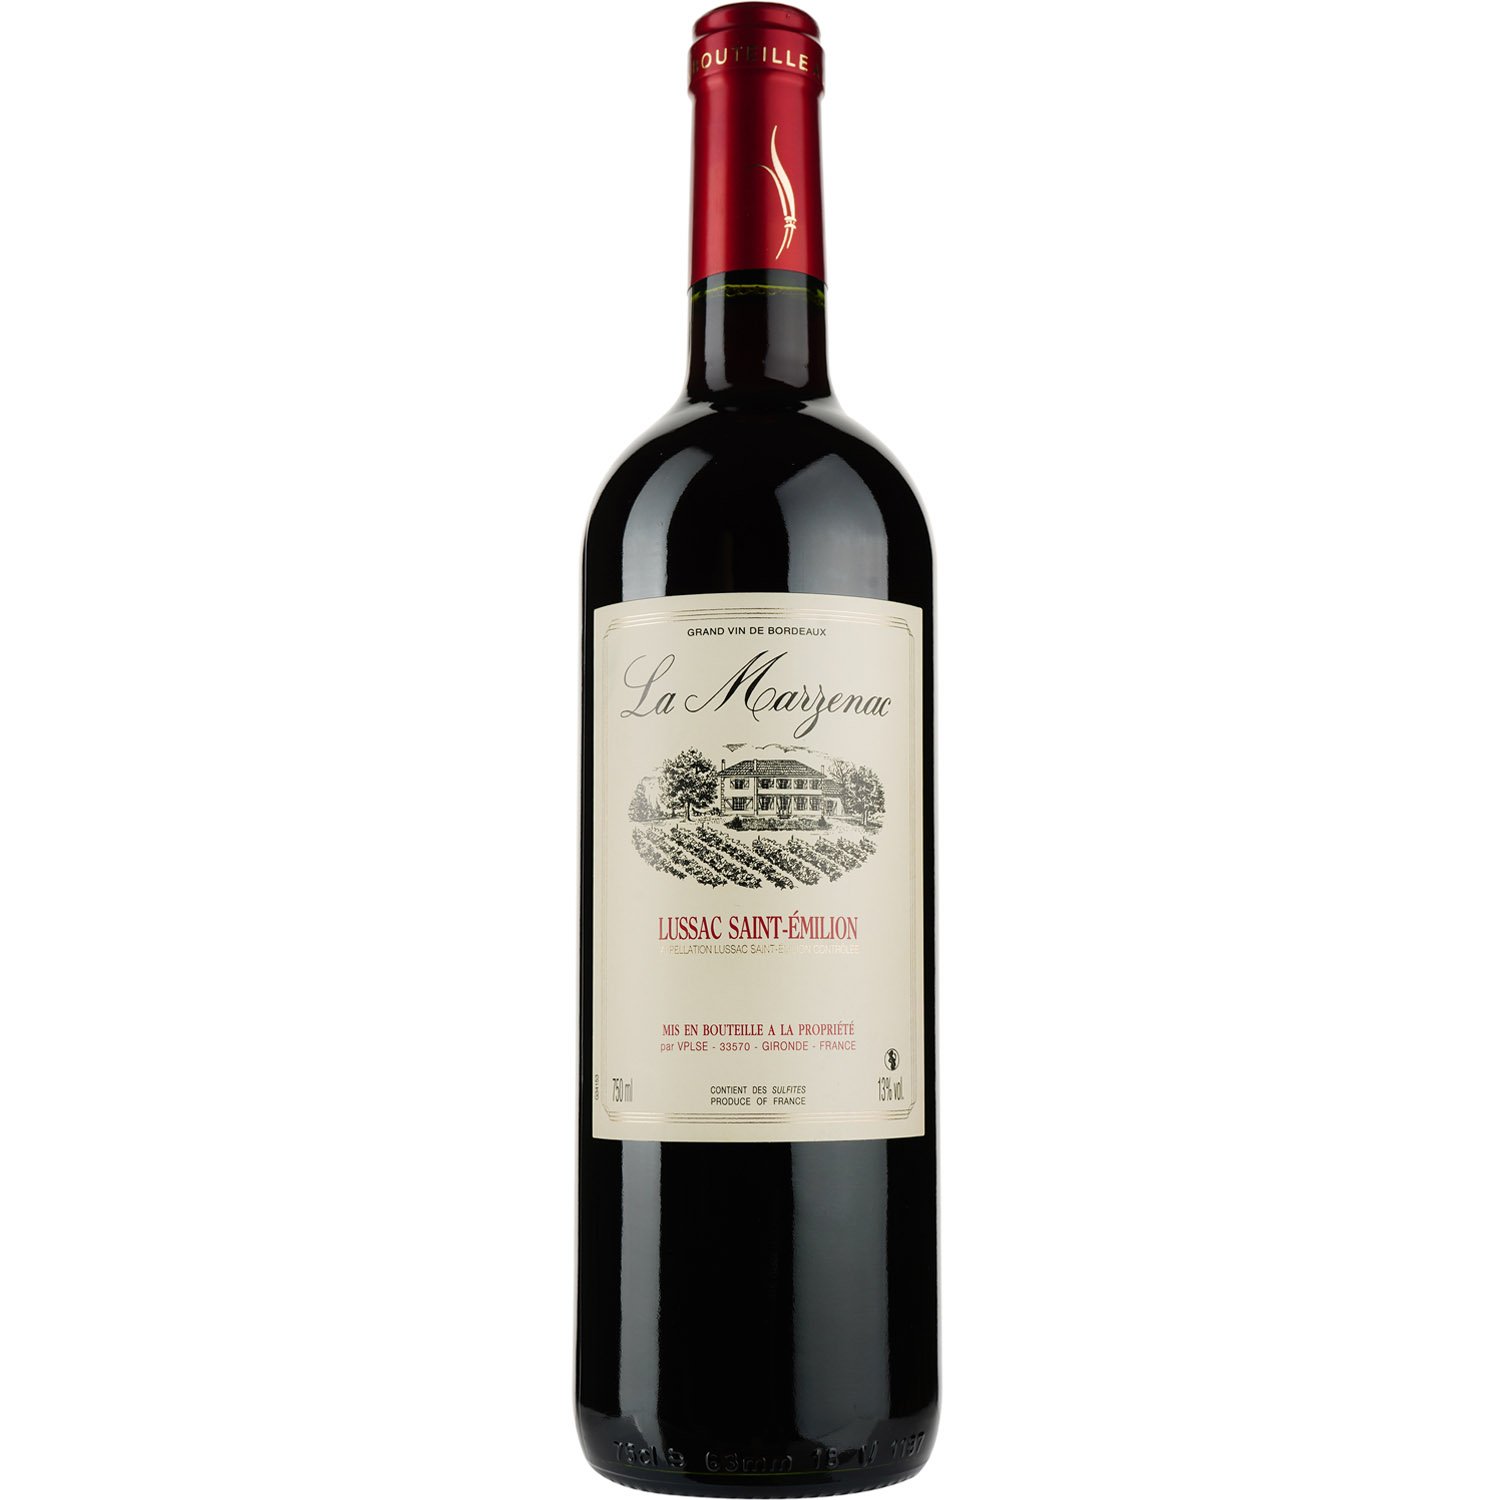 Вино La Marzenac AOP Lussac Saint Emilion 2017, красное, сухое, 0,75 л - фото 1